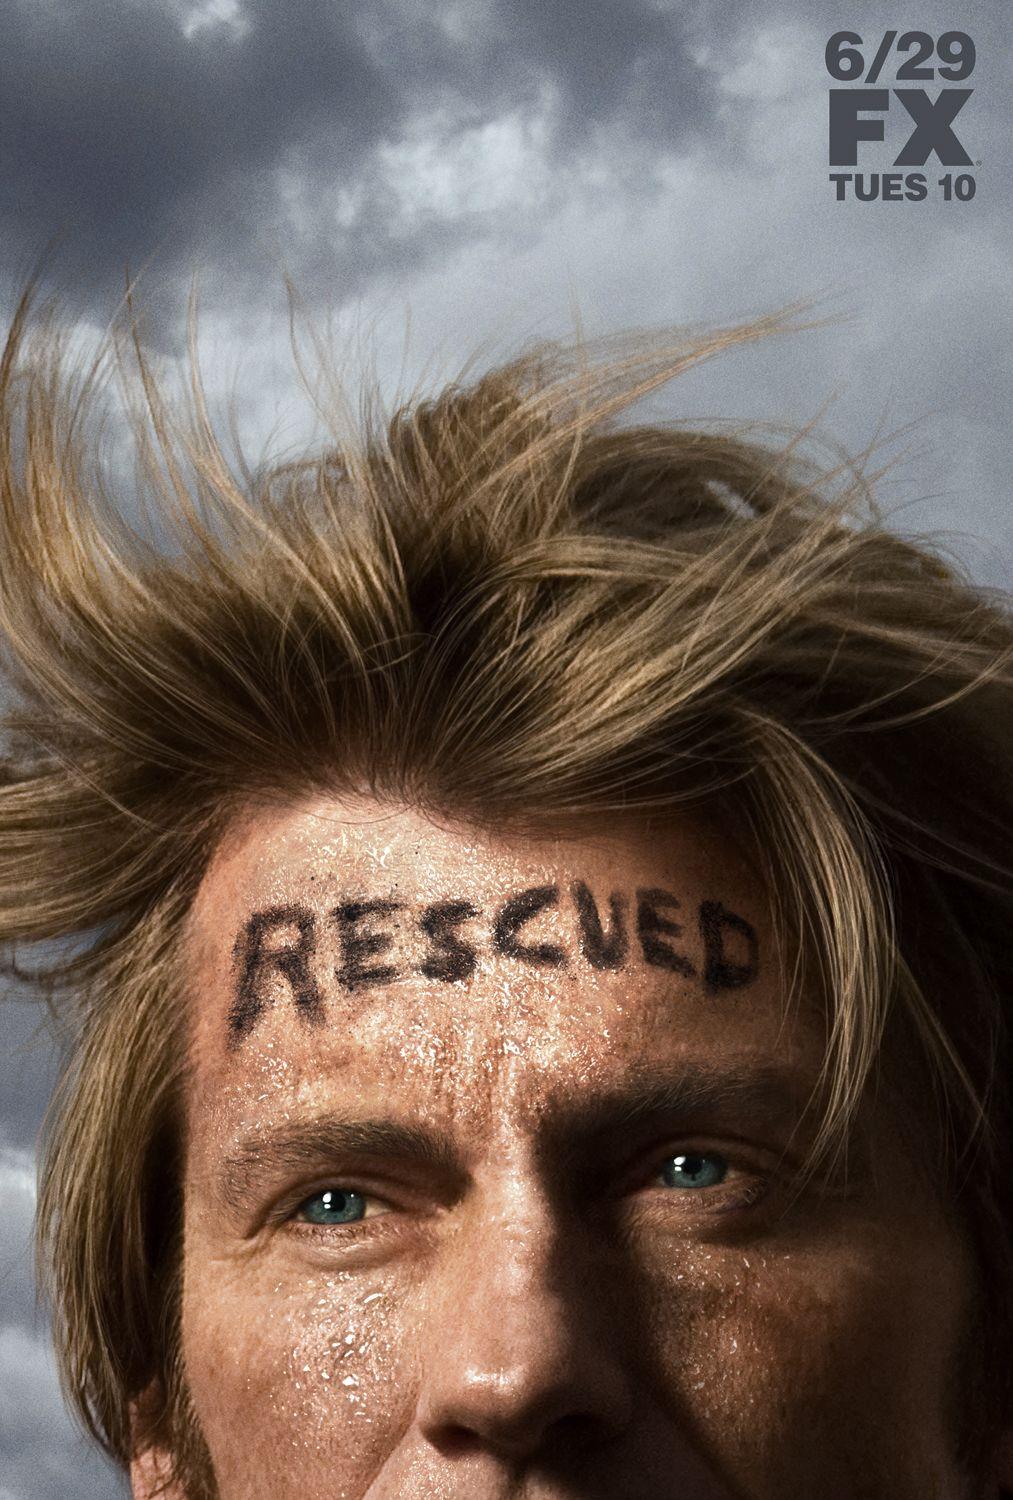 Постер фильма Спаси меня | Rescue Me